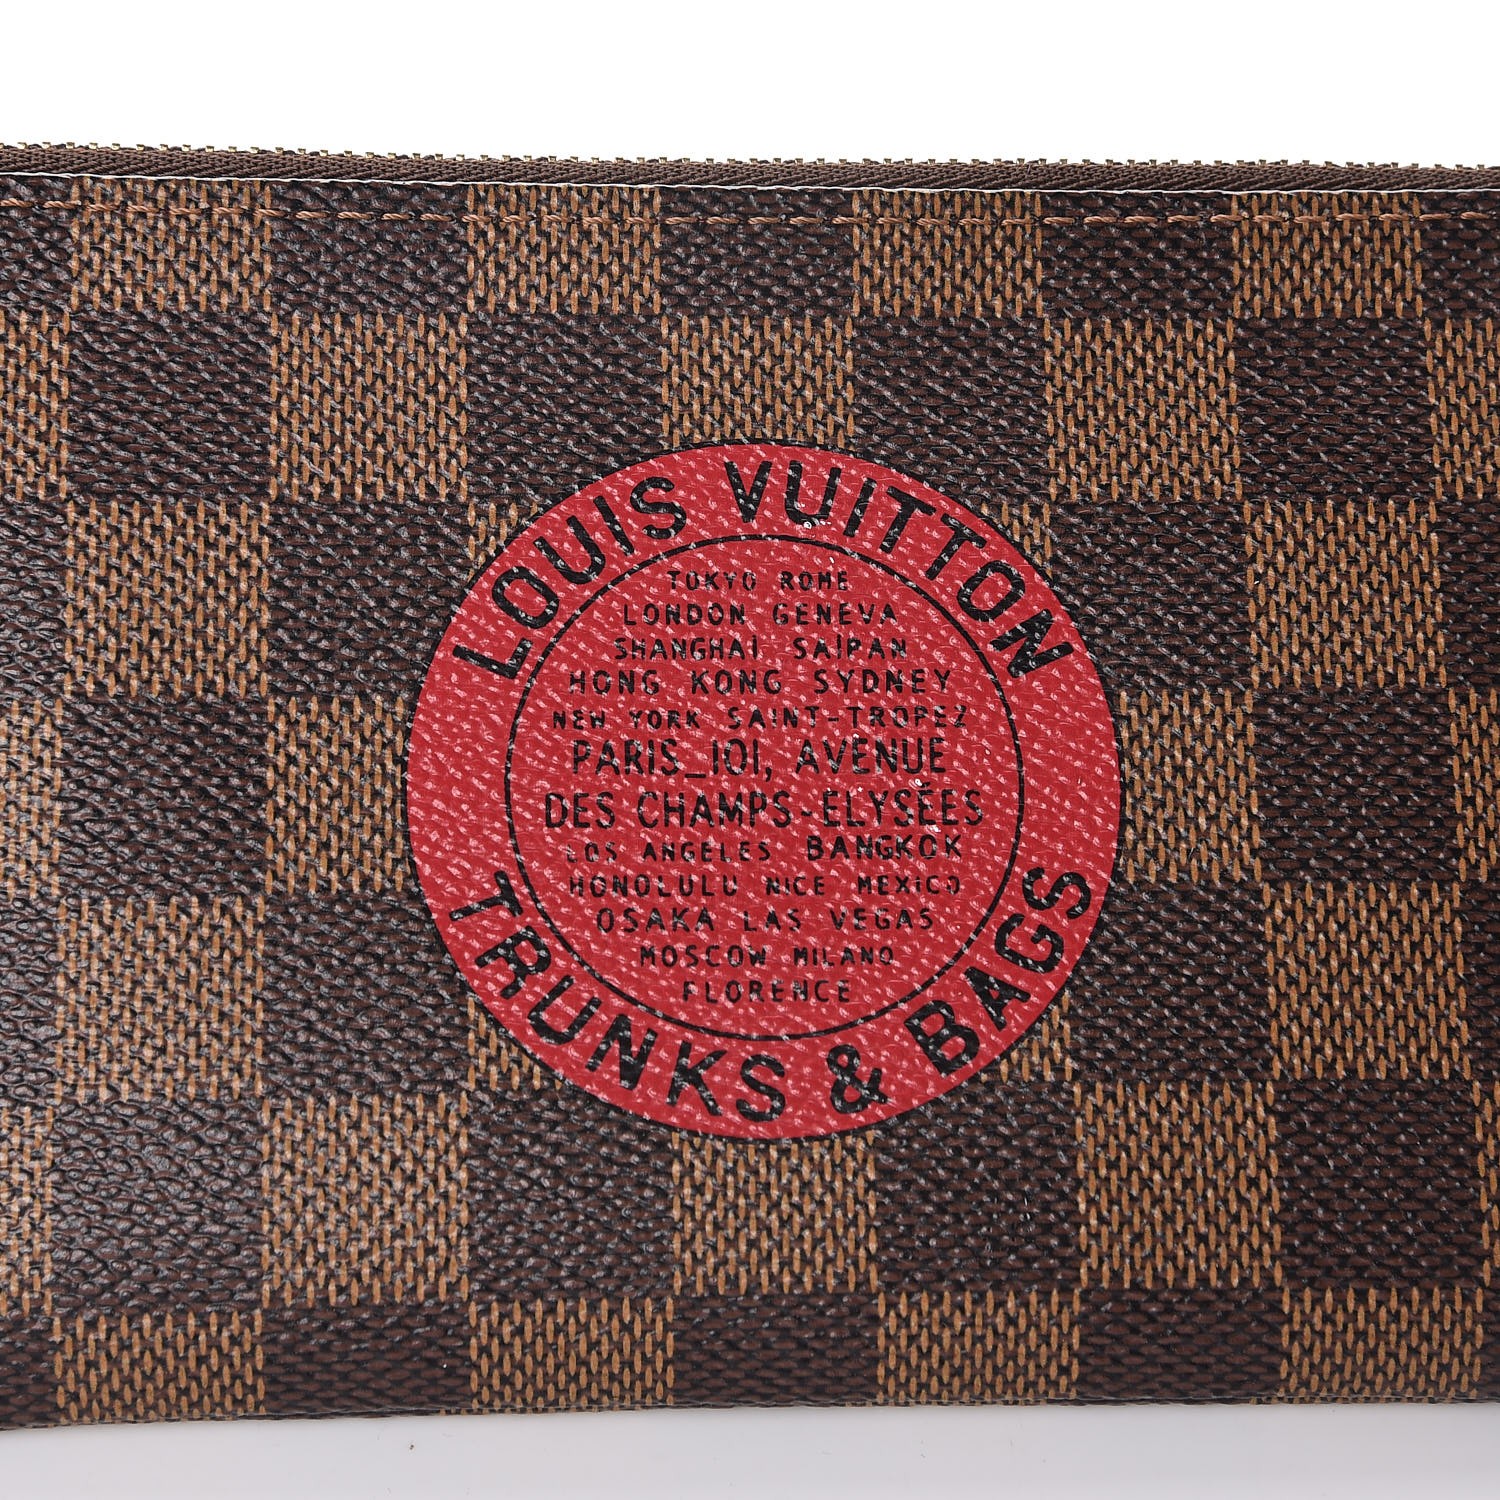 Louis Vuitton Limited Rare Stripe Monogram Rayures Neverfull MM